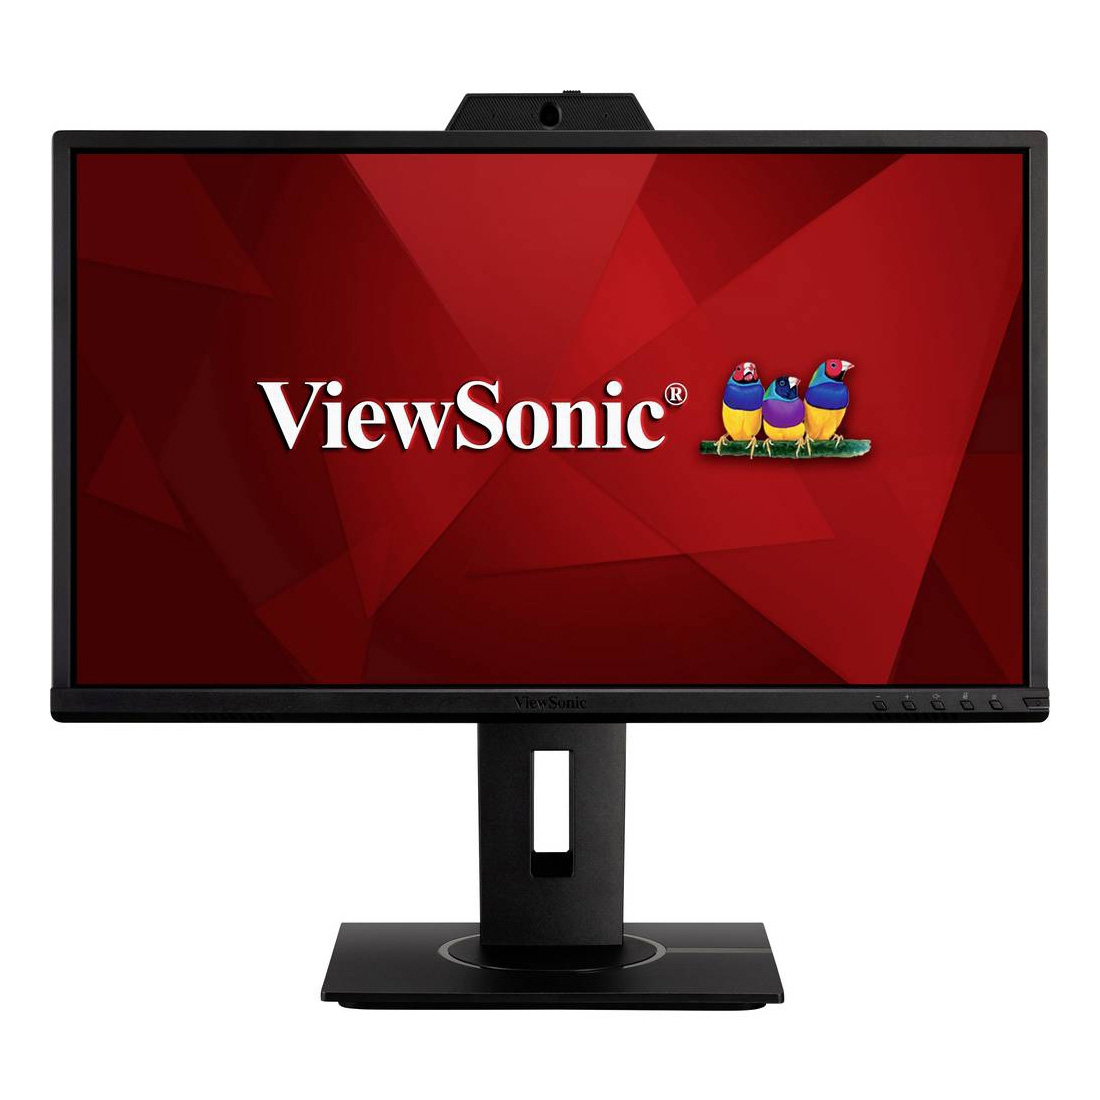 ViewSonic VG2440V - LED-Monitor - 61 cm (24) (23.8 sichtbar) - 1920 x 1080 Full HD (1080p) - IPS - 250 cd/m² - 1000:1 - 5 ms - HDMI, VGA, DisplayPort - Lautsprecher